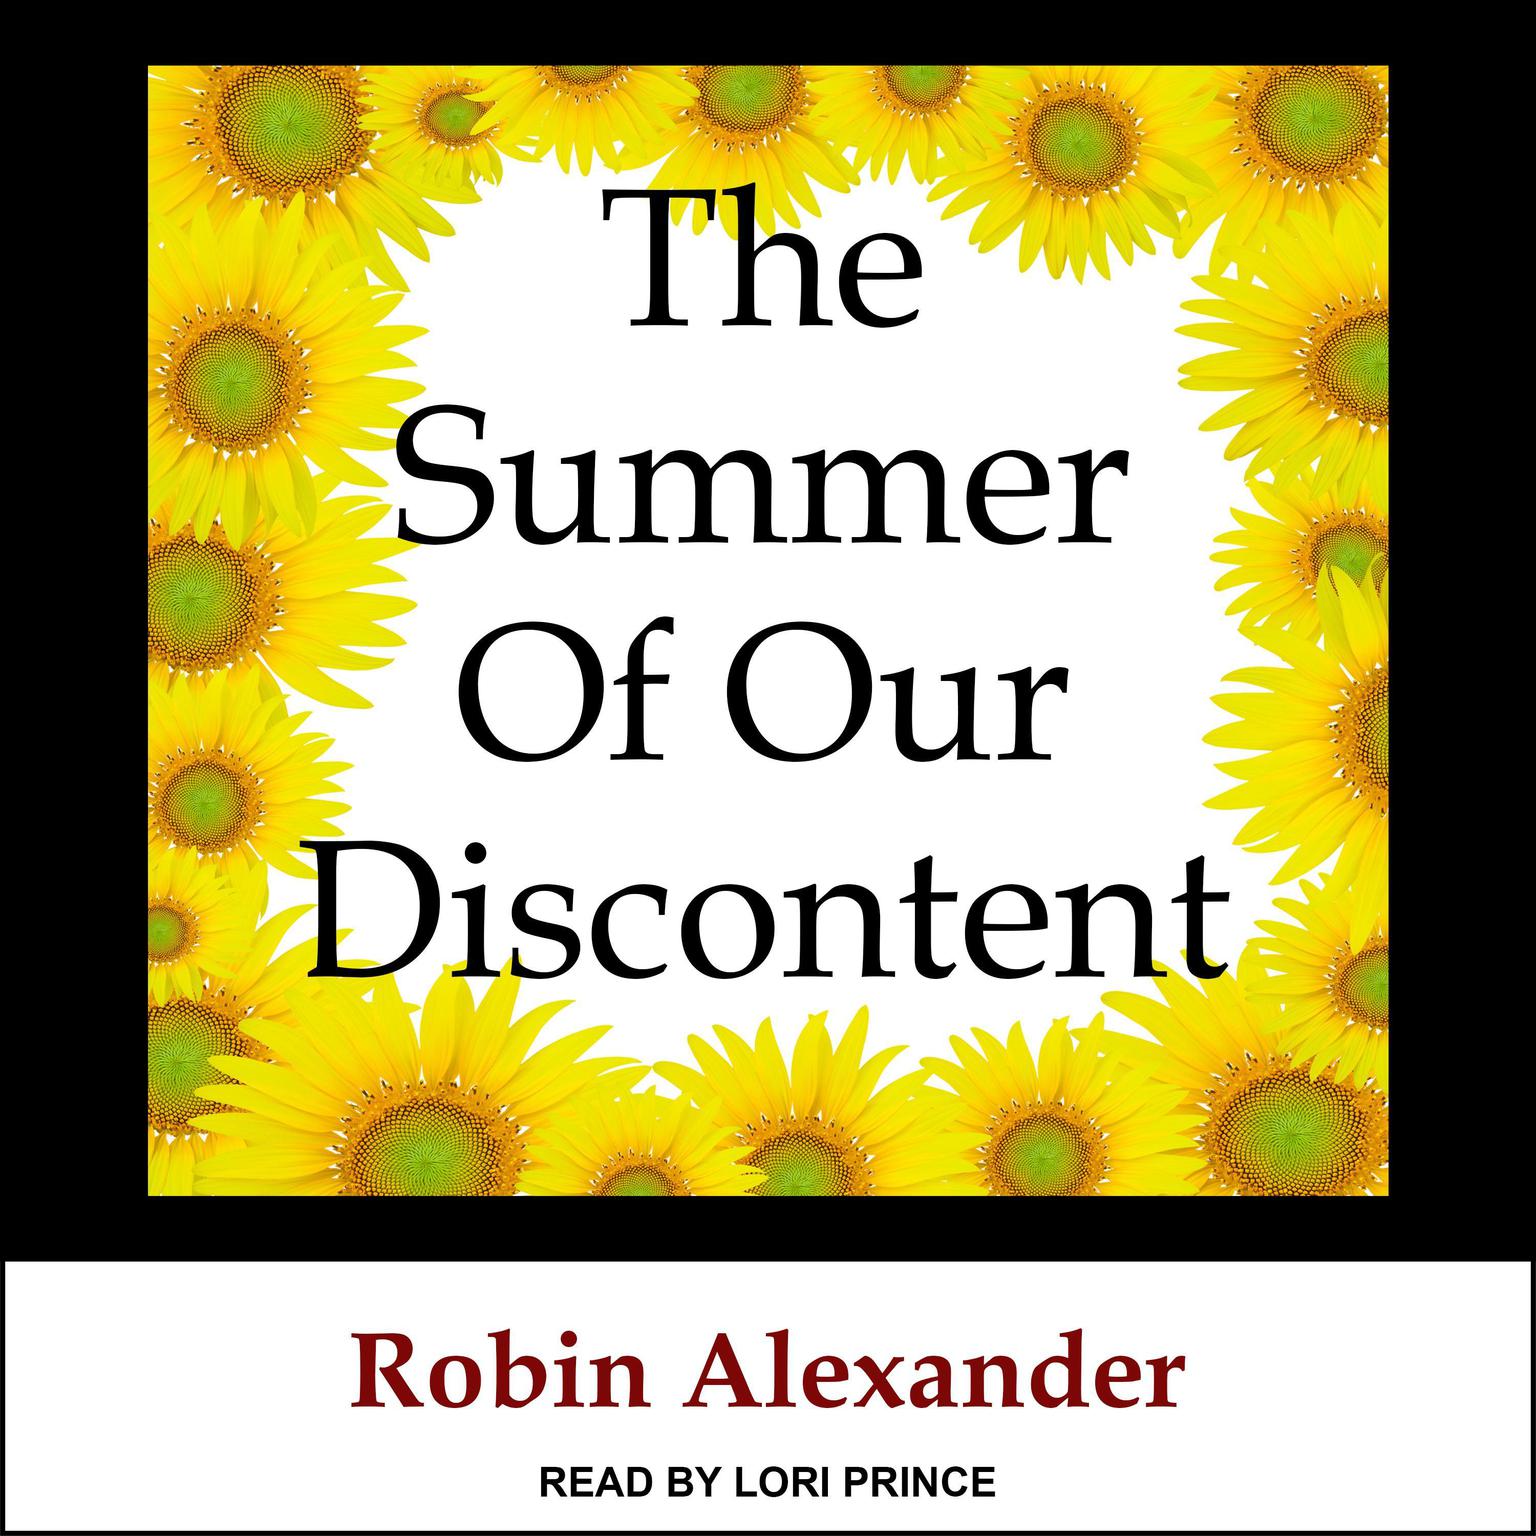 Robin Alexander: The Summer of our Discontent (EBook, 2019, Robin Alexander)